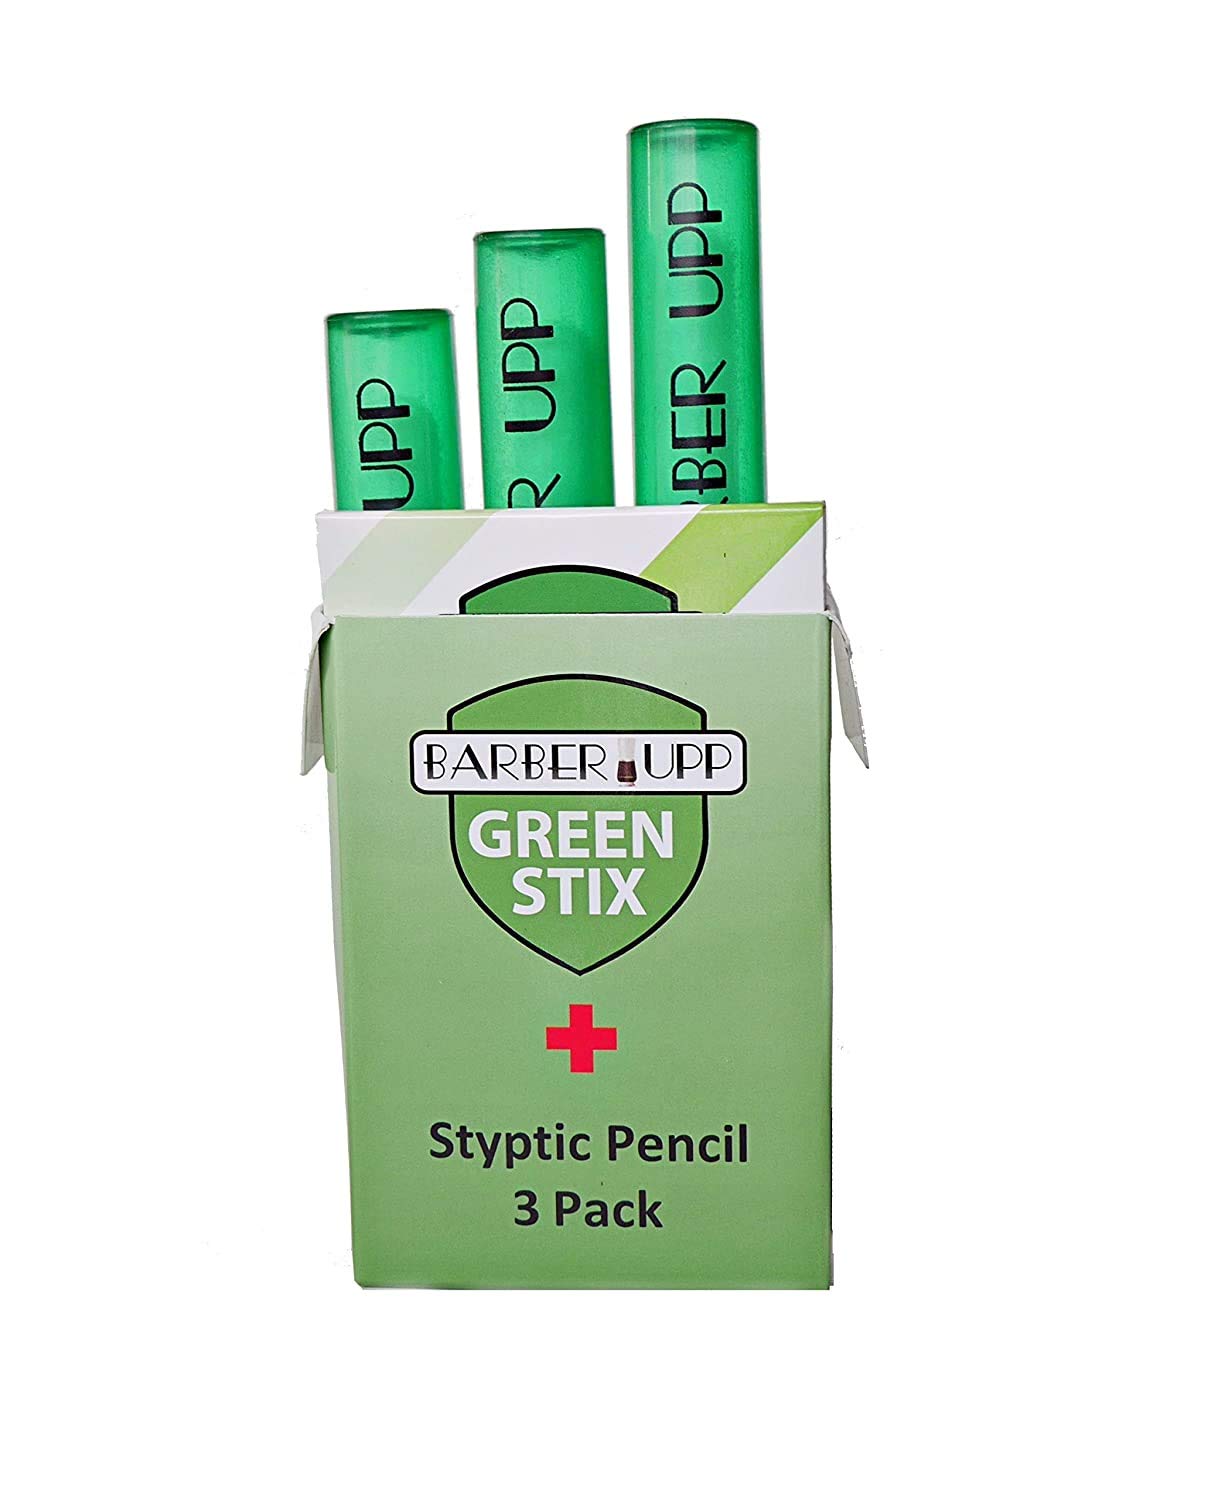 BarberUpp Green Stix + Styptic Pencil Set